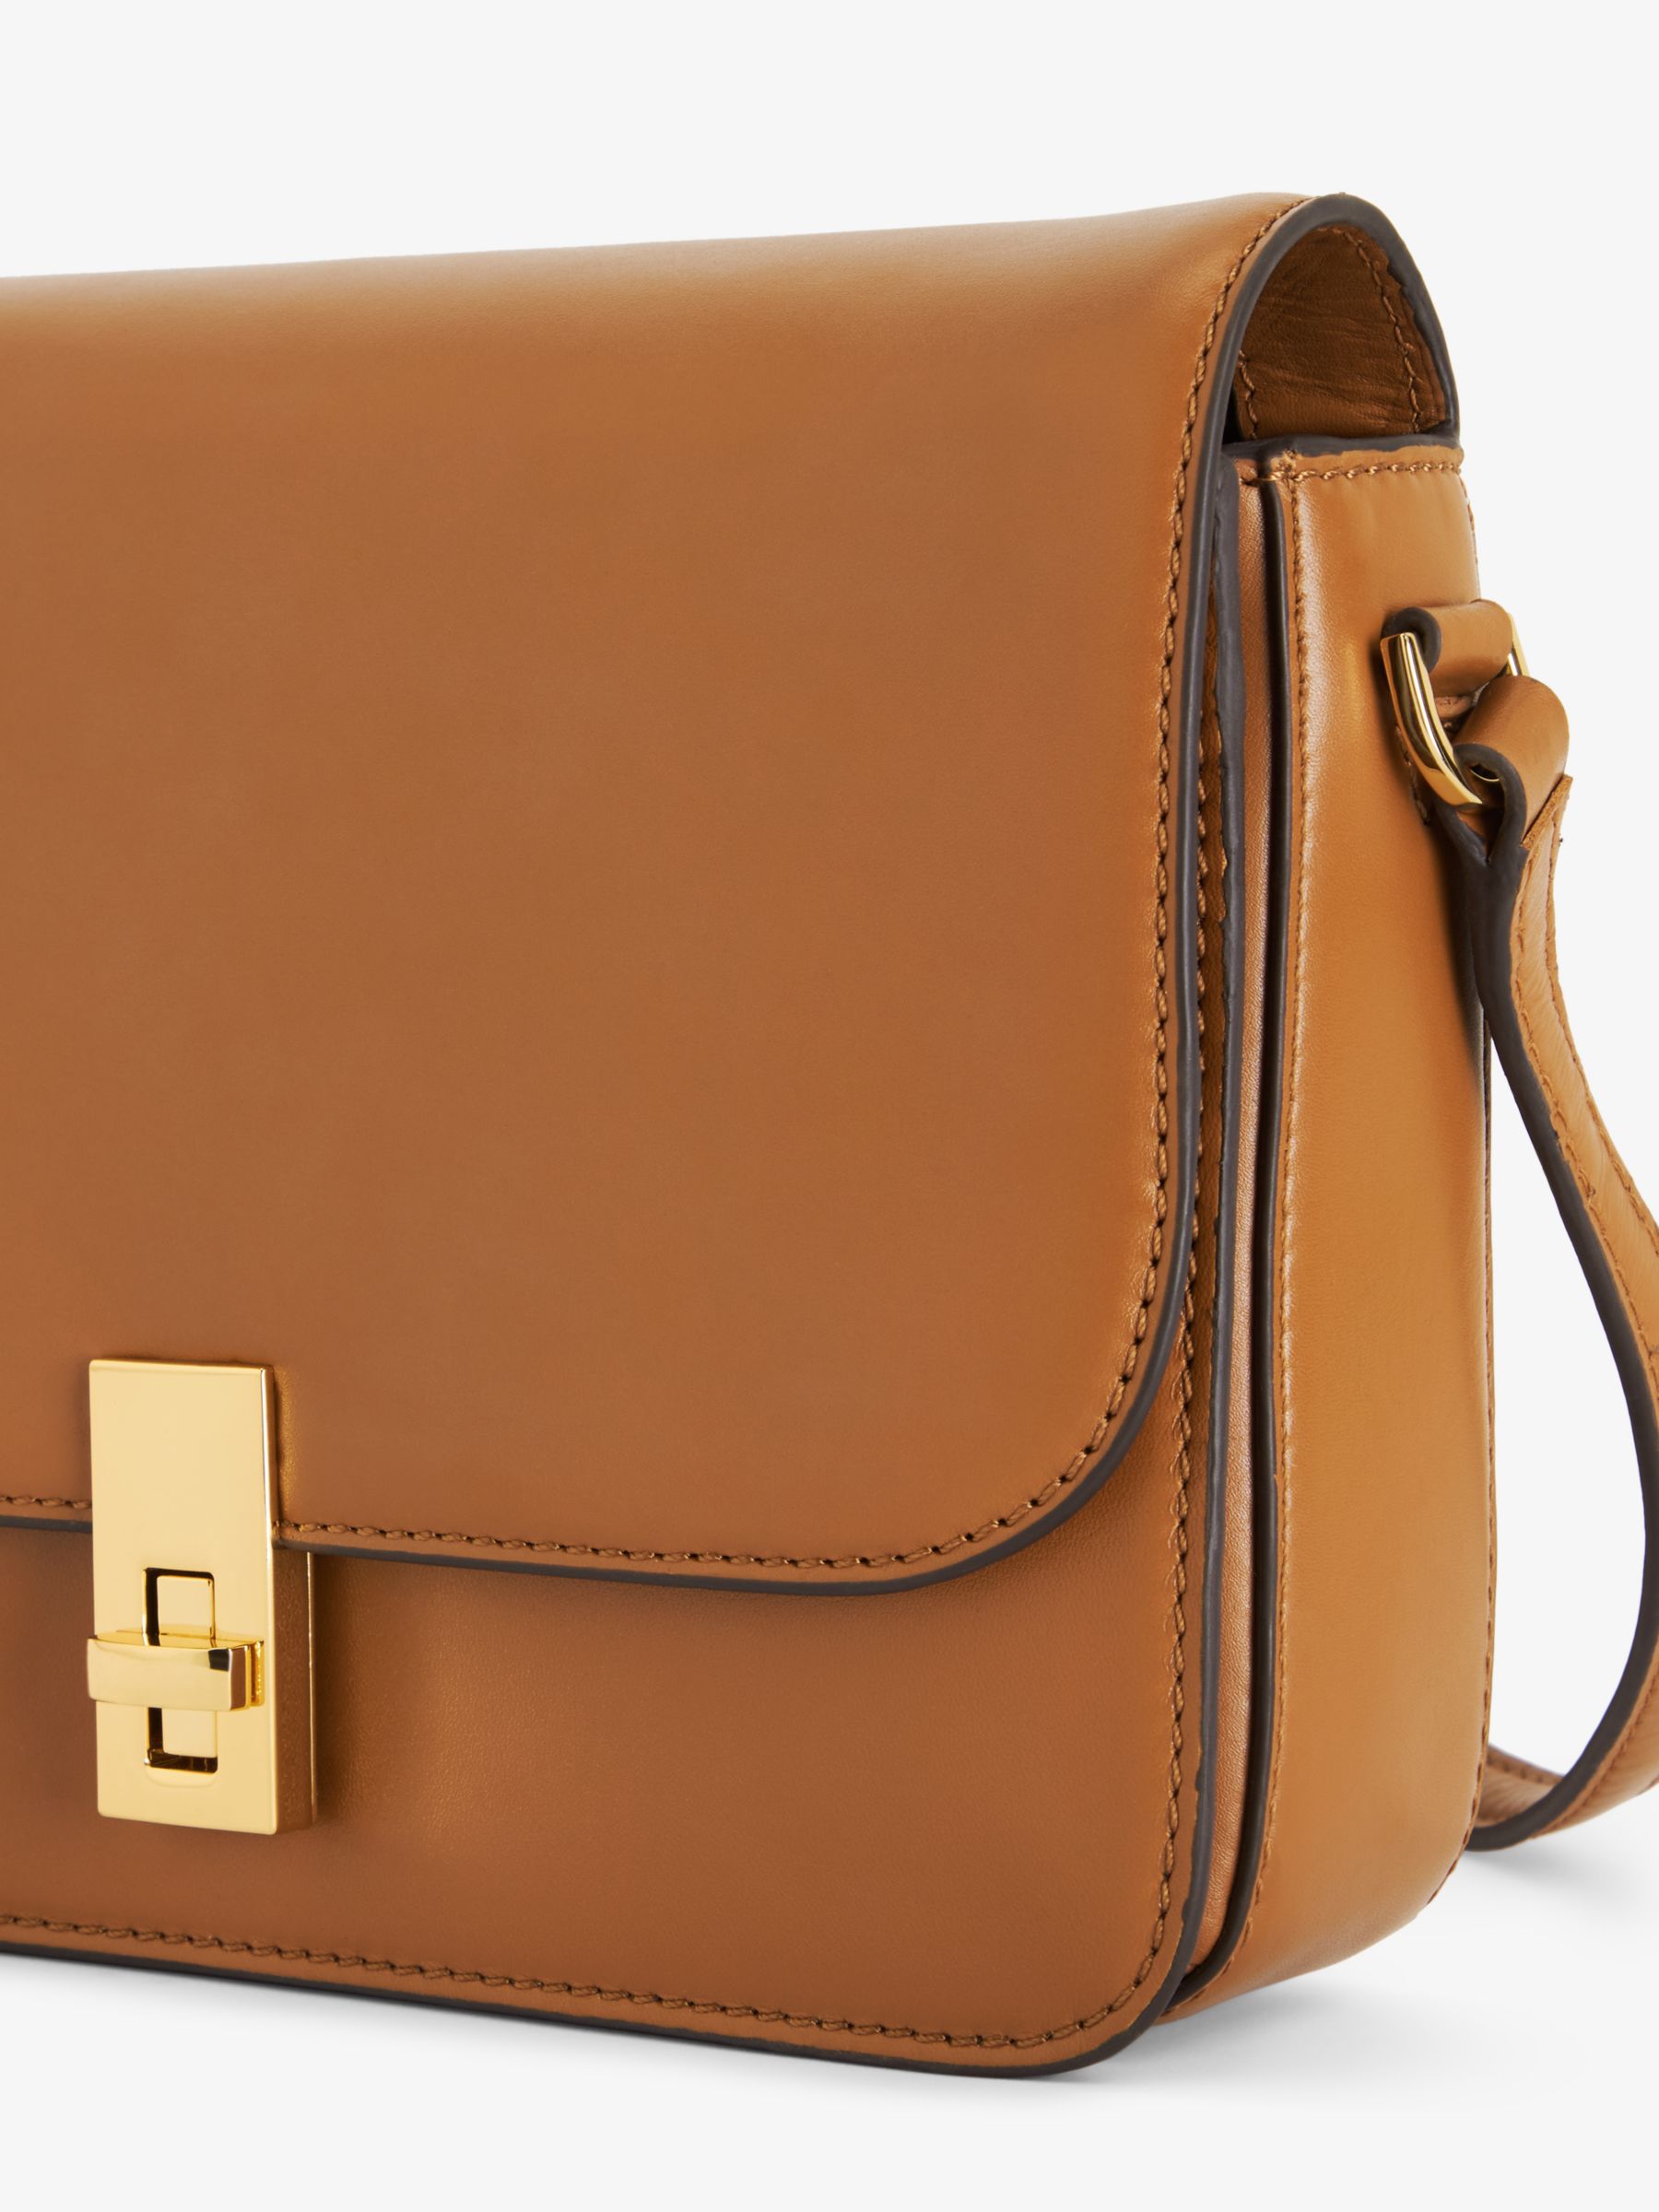 Elegance' Leather Cross Body Bag: C-50